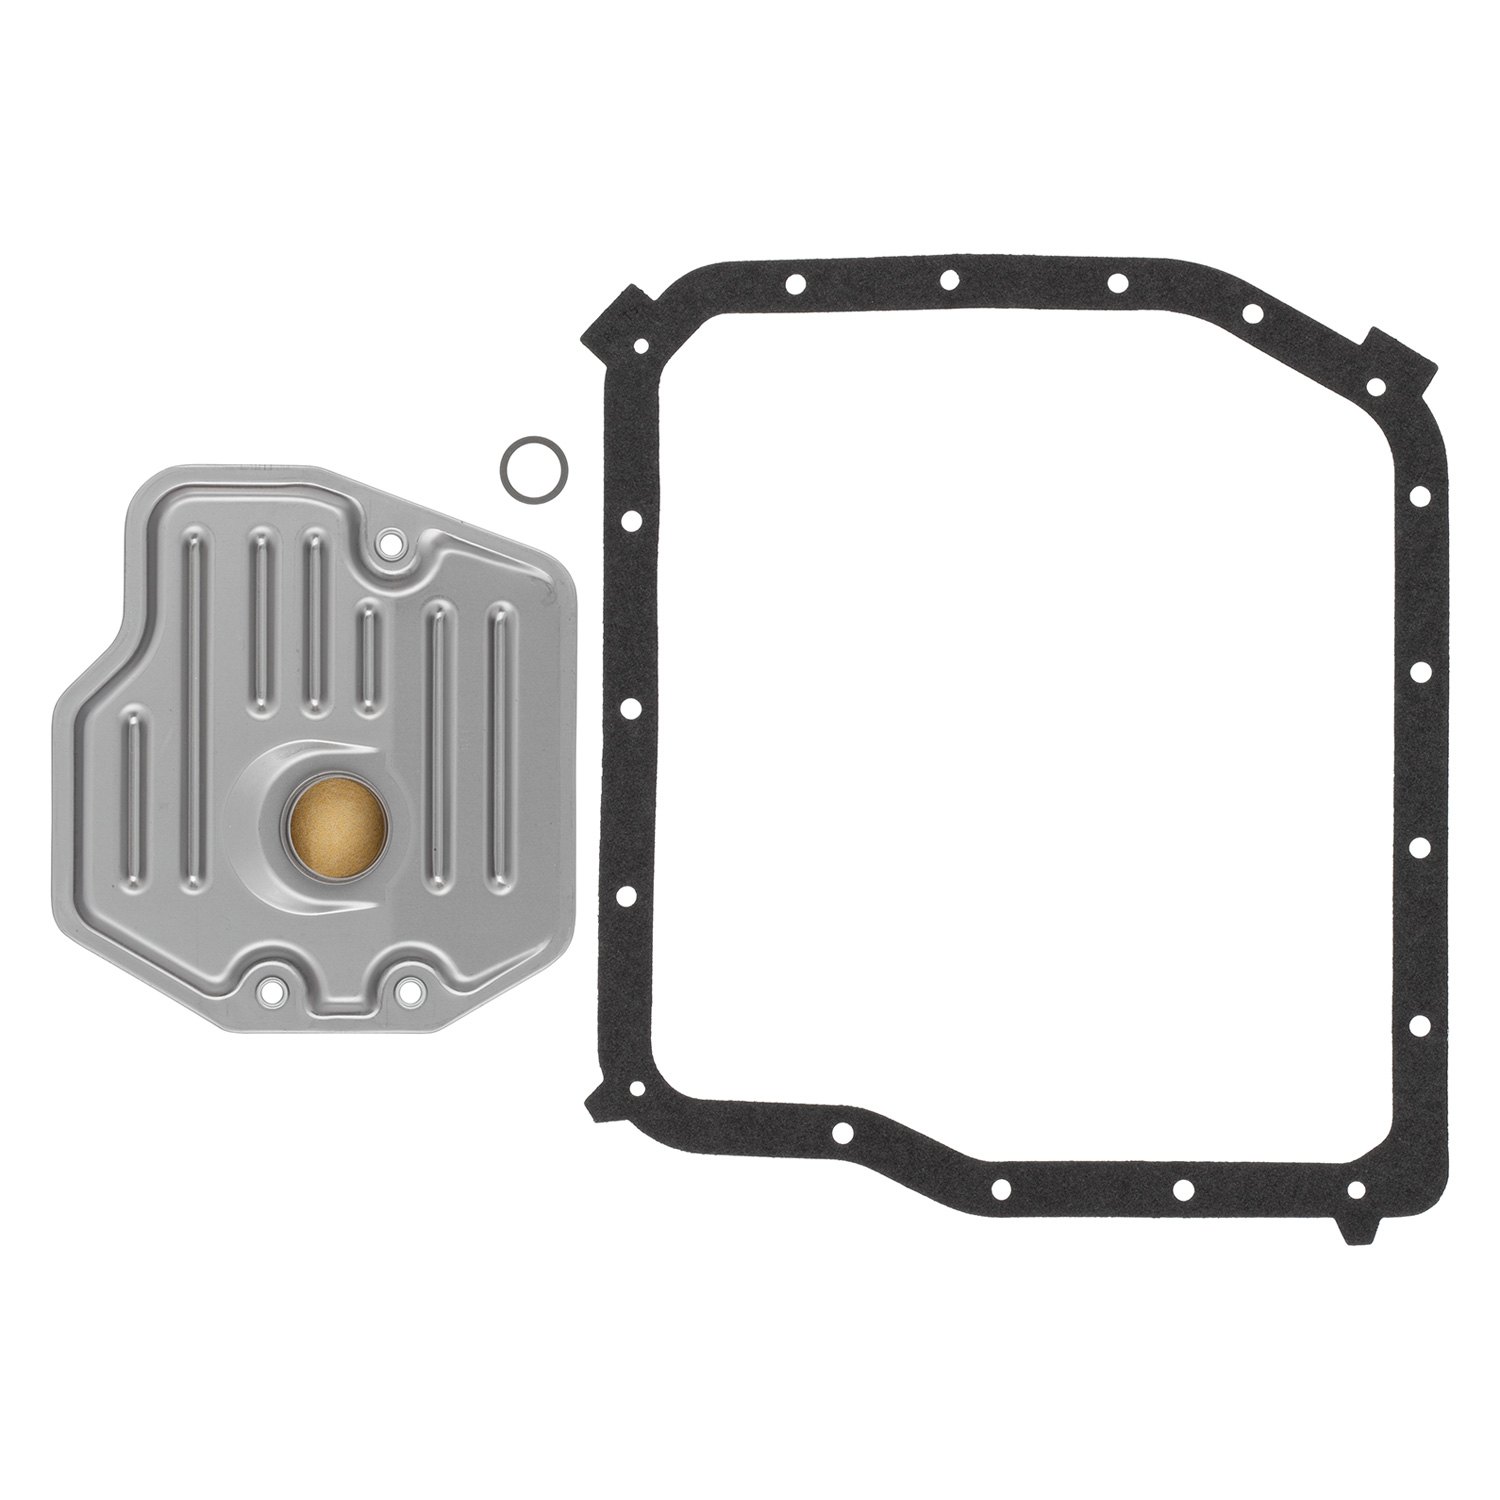 Automatic Transmission Filter & Oil Pan Gasket Kit ATP for LEXUS SCION TOYOTA